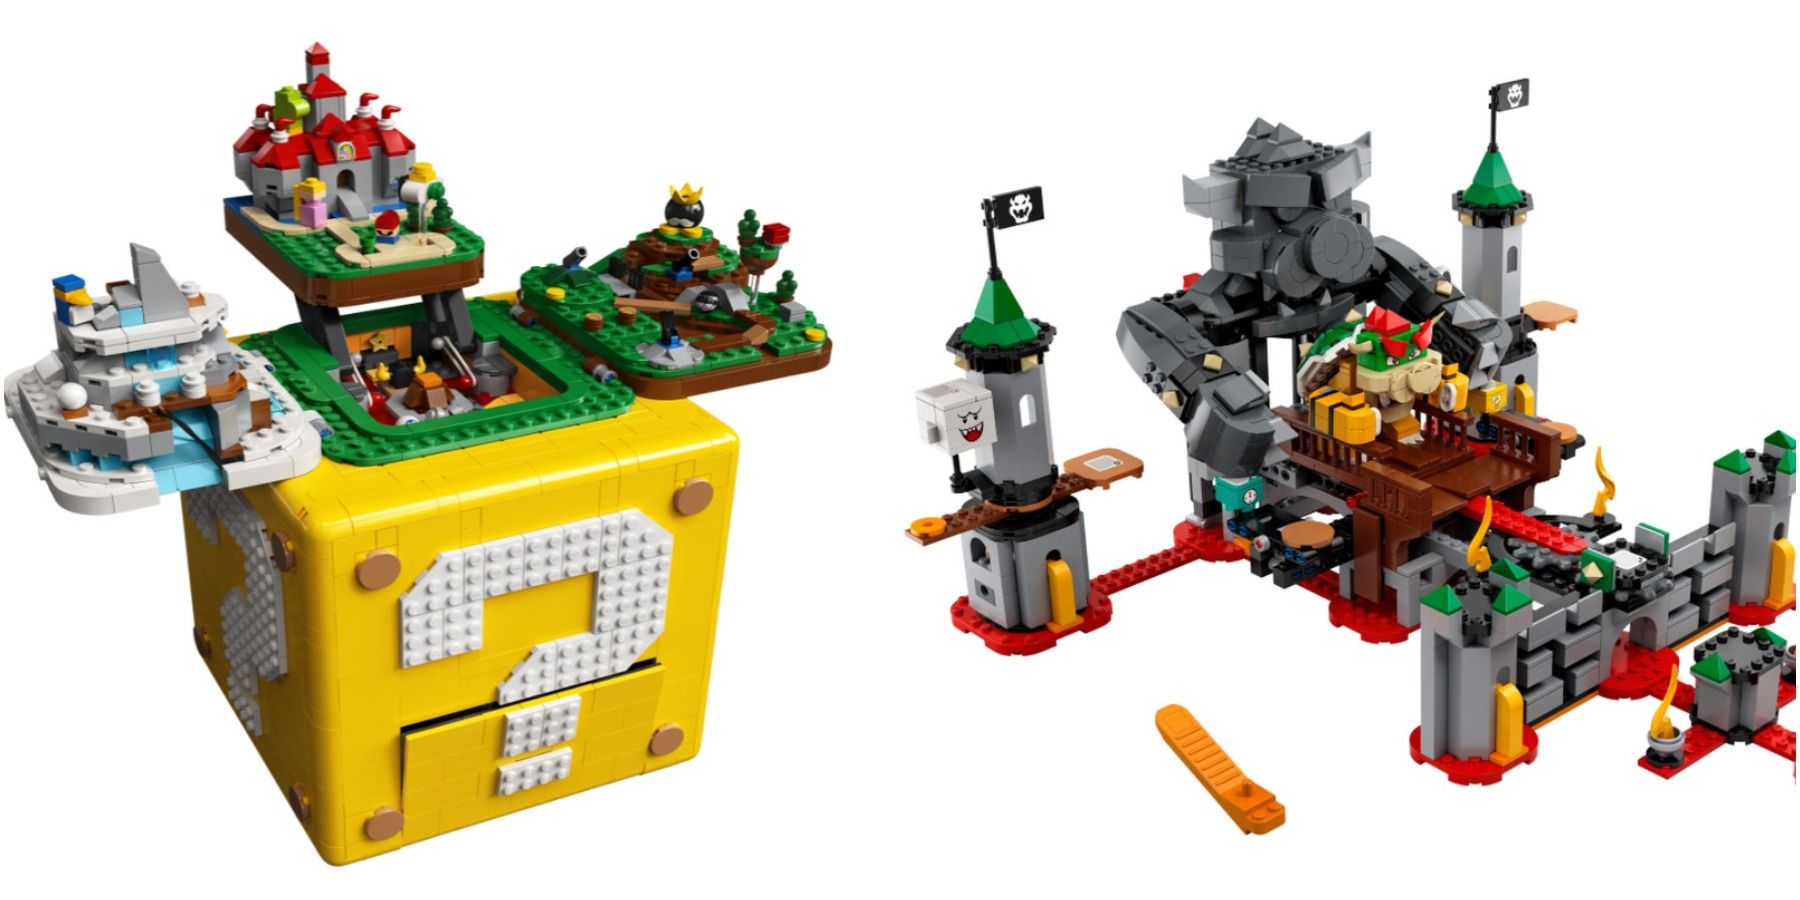 (Left) Lego question mark block (Right) Lego Bowser's castle